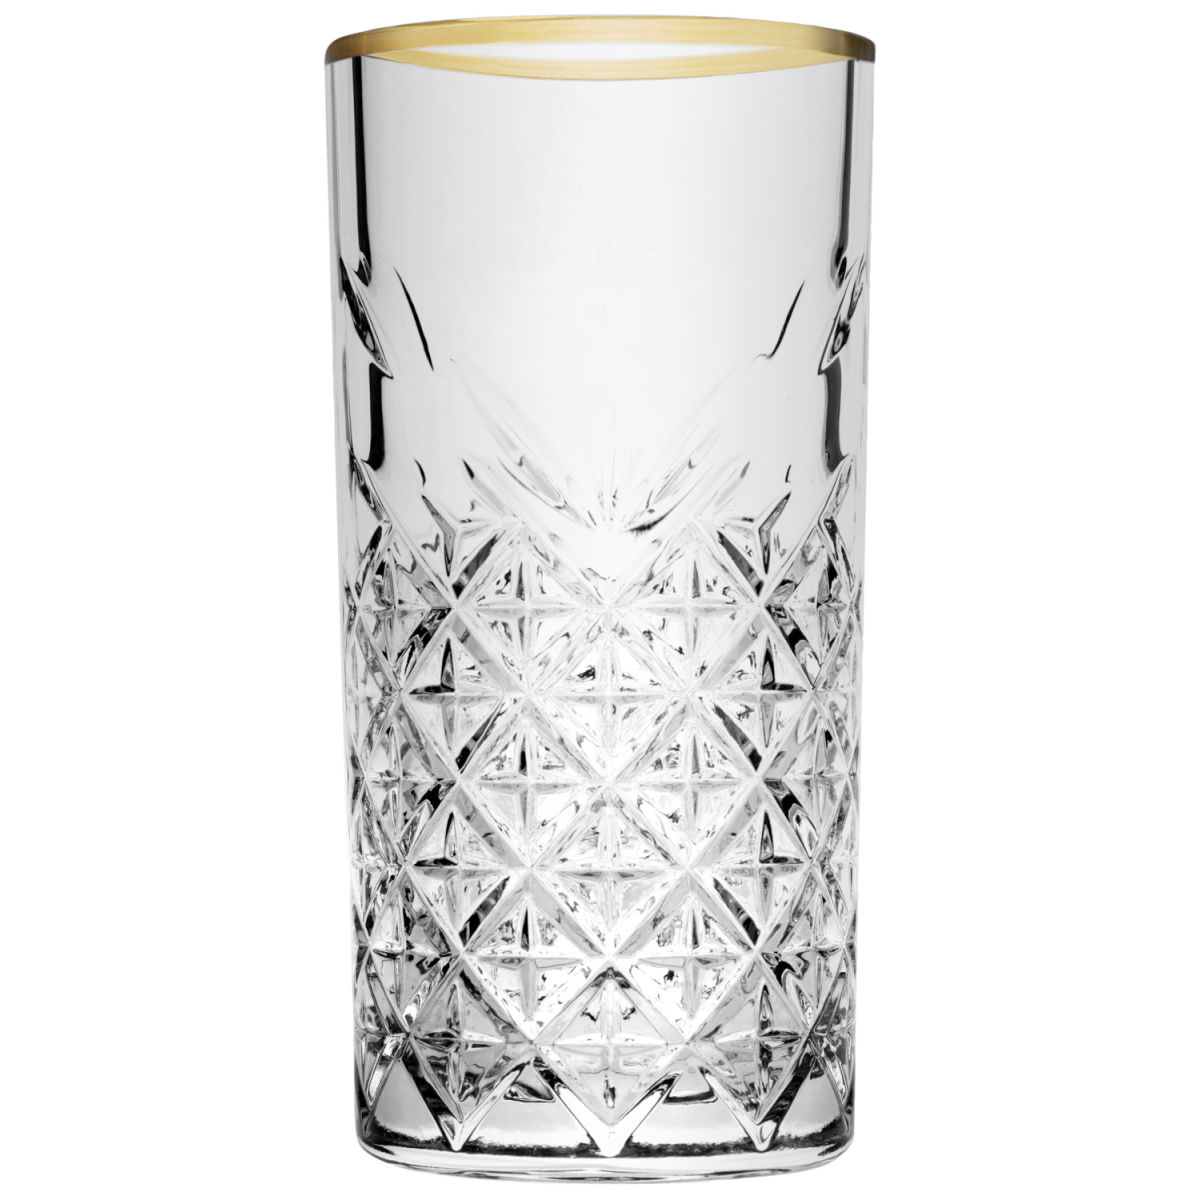 Pasabahçe Longdrinkglas Timeless; 295ml, 6.7x14.3 cm (ØxH); transparant/goud; 4 stuk / verpakking